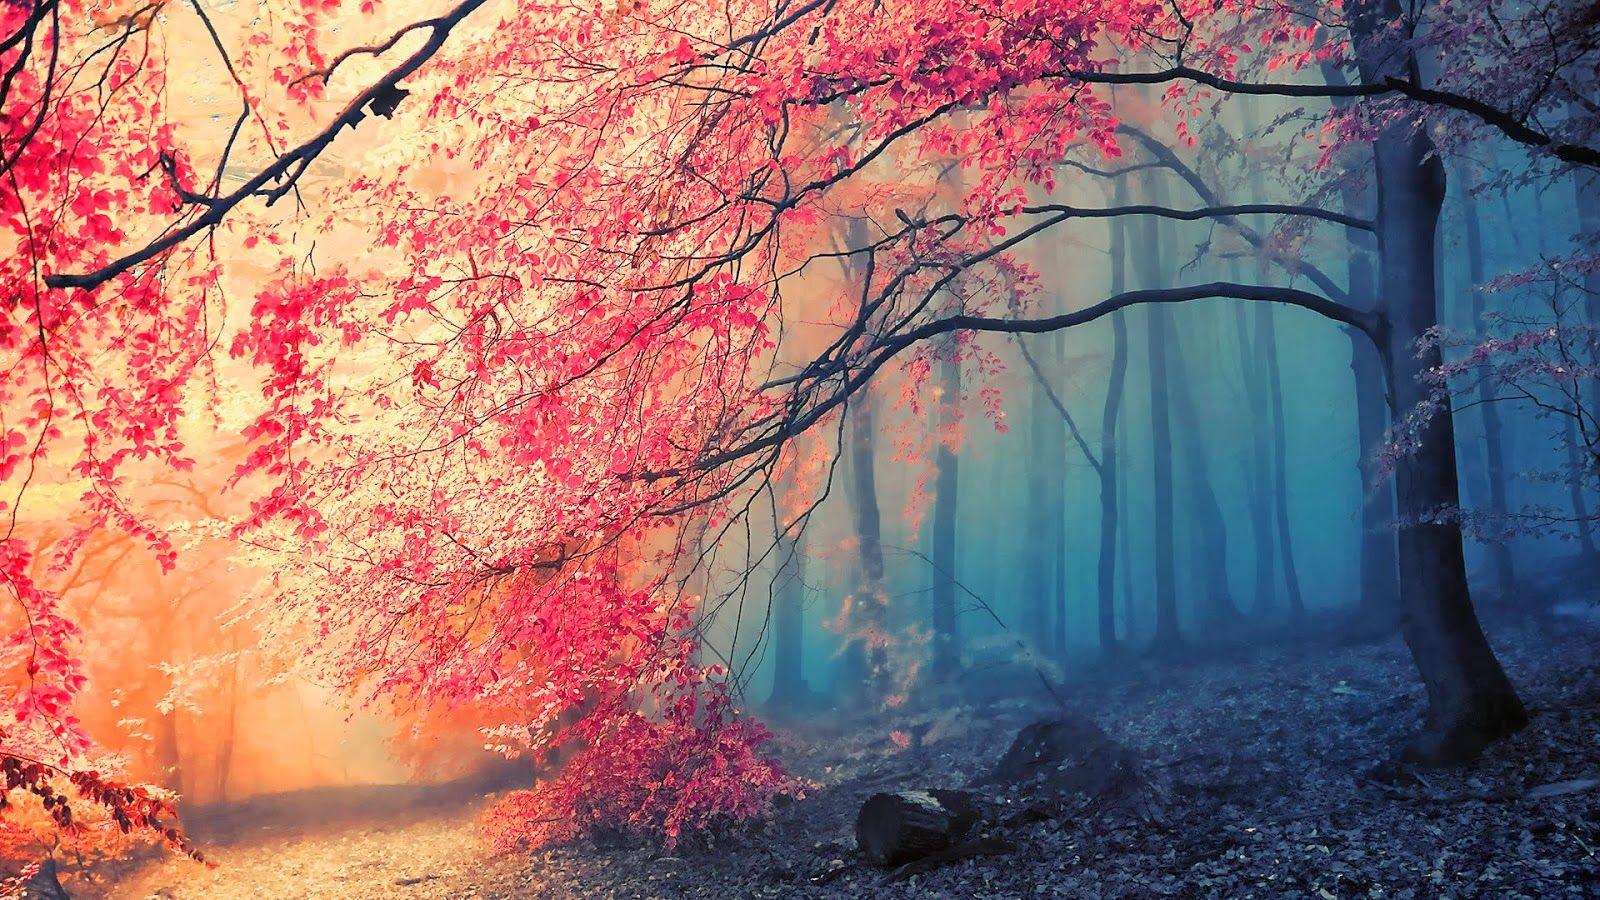 HD Wallpaper 1080p Nature autumn. Nice Pics Gallery